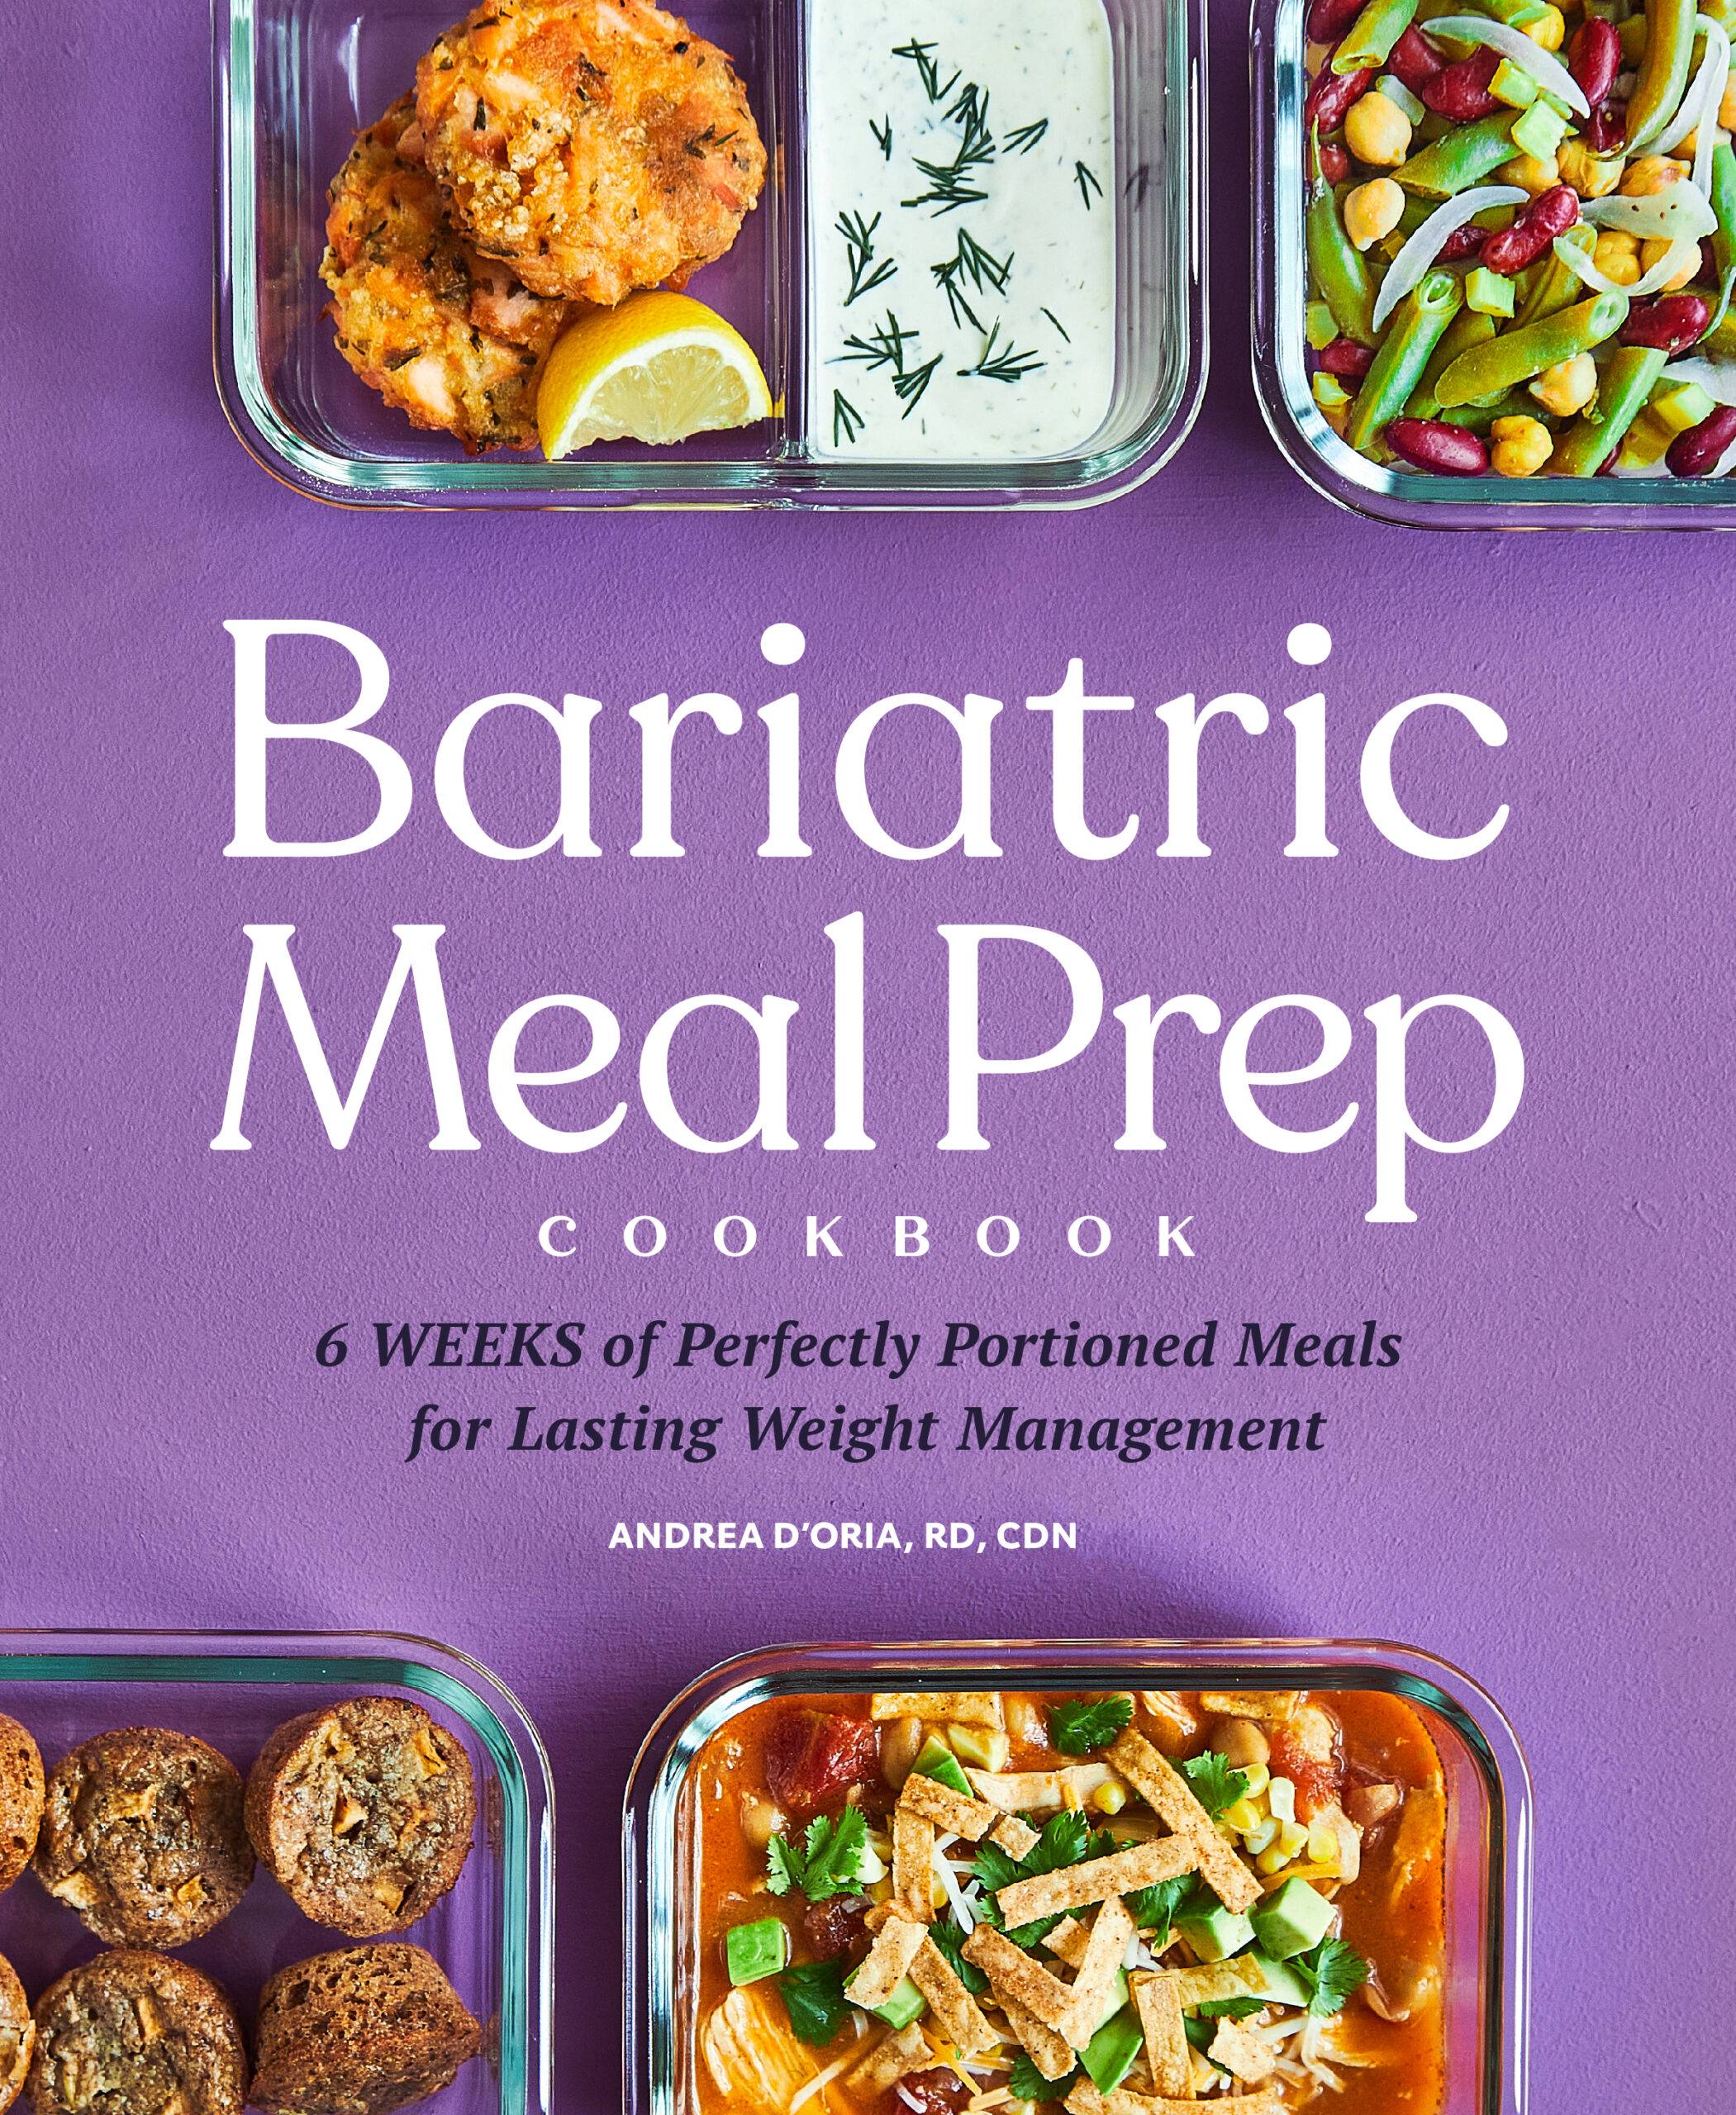 Bariatric Meal Prep Cook Book, Andrea D'Oria